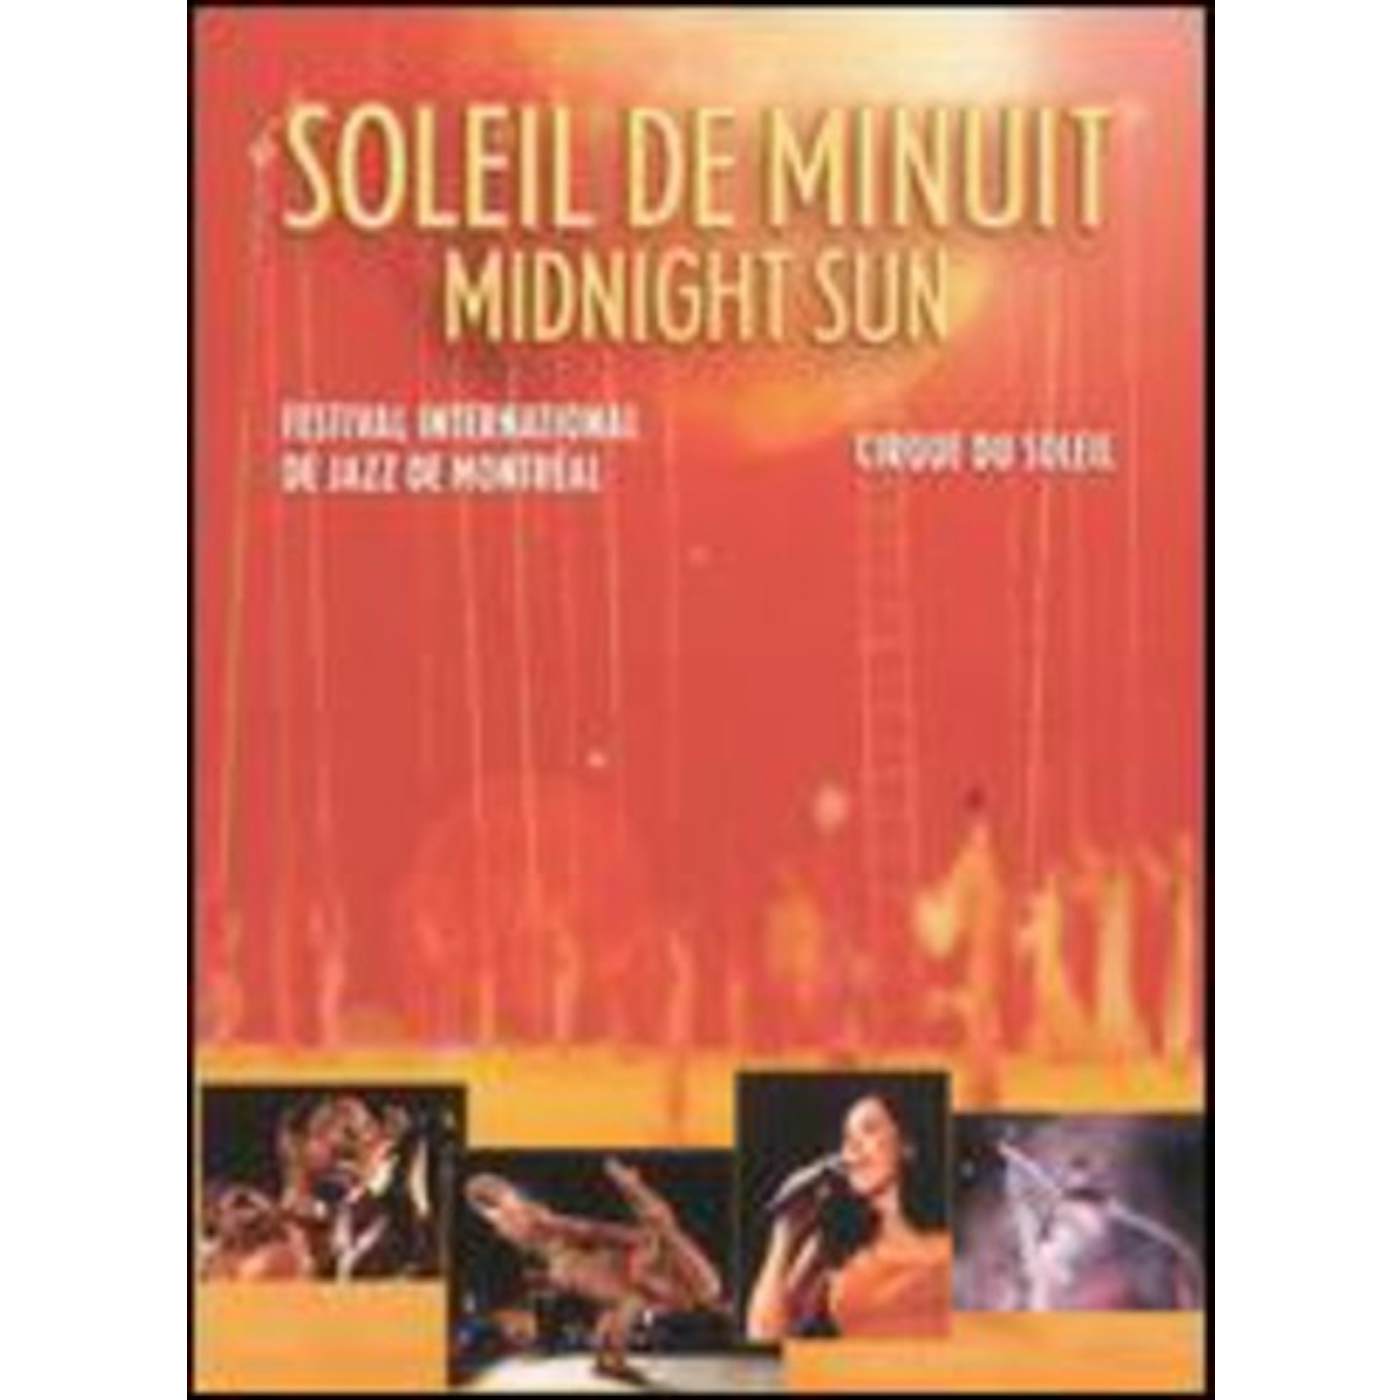 Cirque du Soleil MIDNIGHT SUN / SOLEIL DE MINUIT DVD